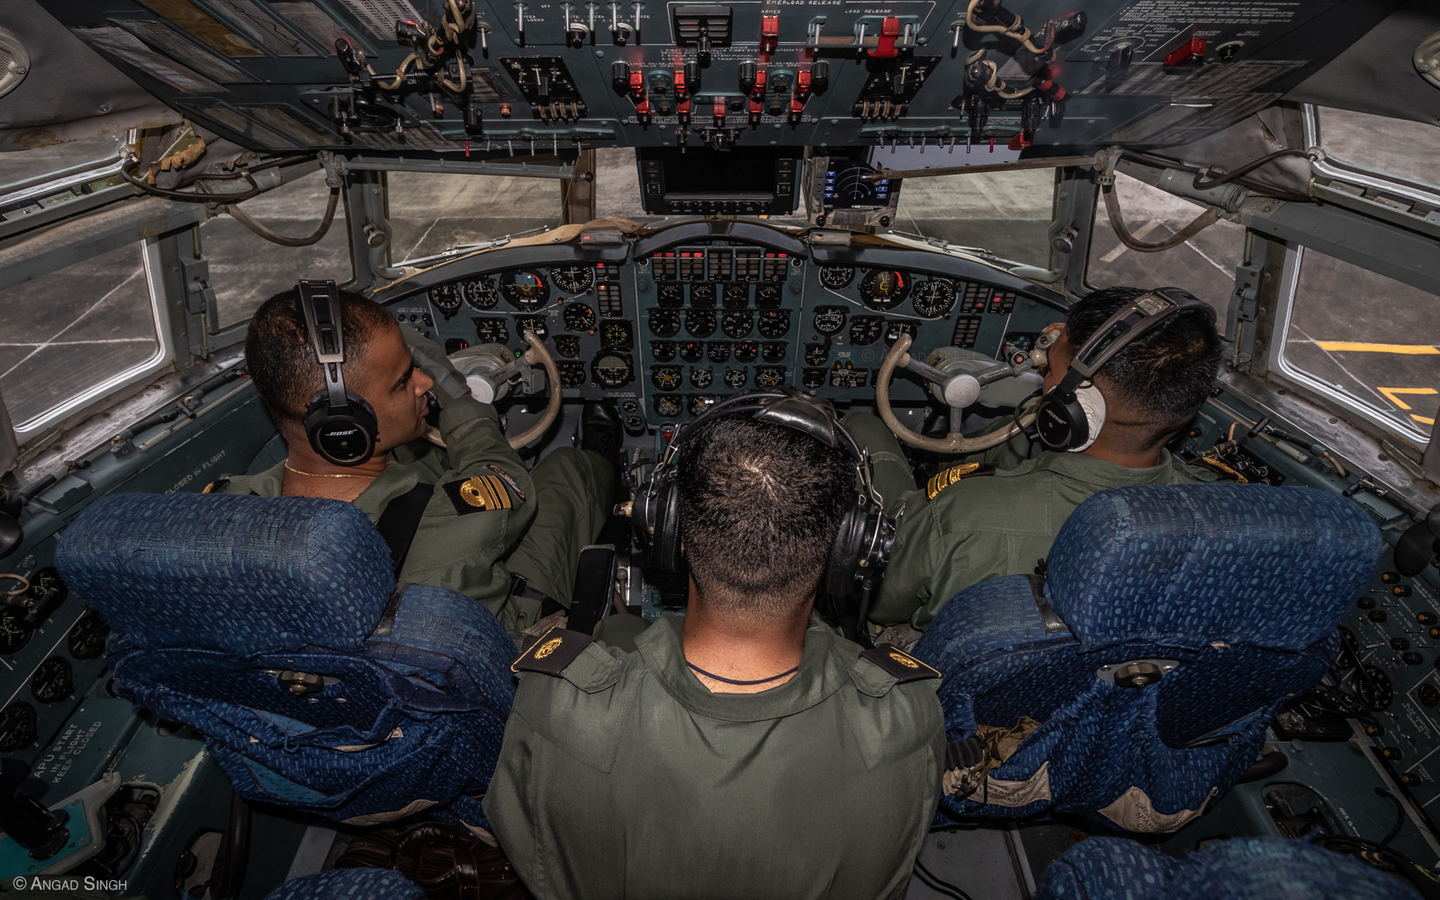 The Il-38 flight deck is typically Russian — an analog smorgasbord. <em>Angad Singh</em>